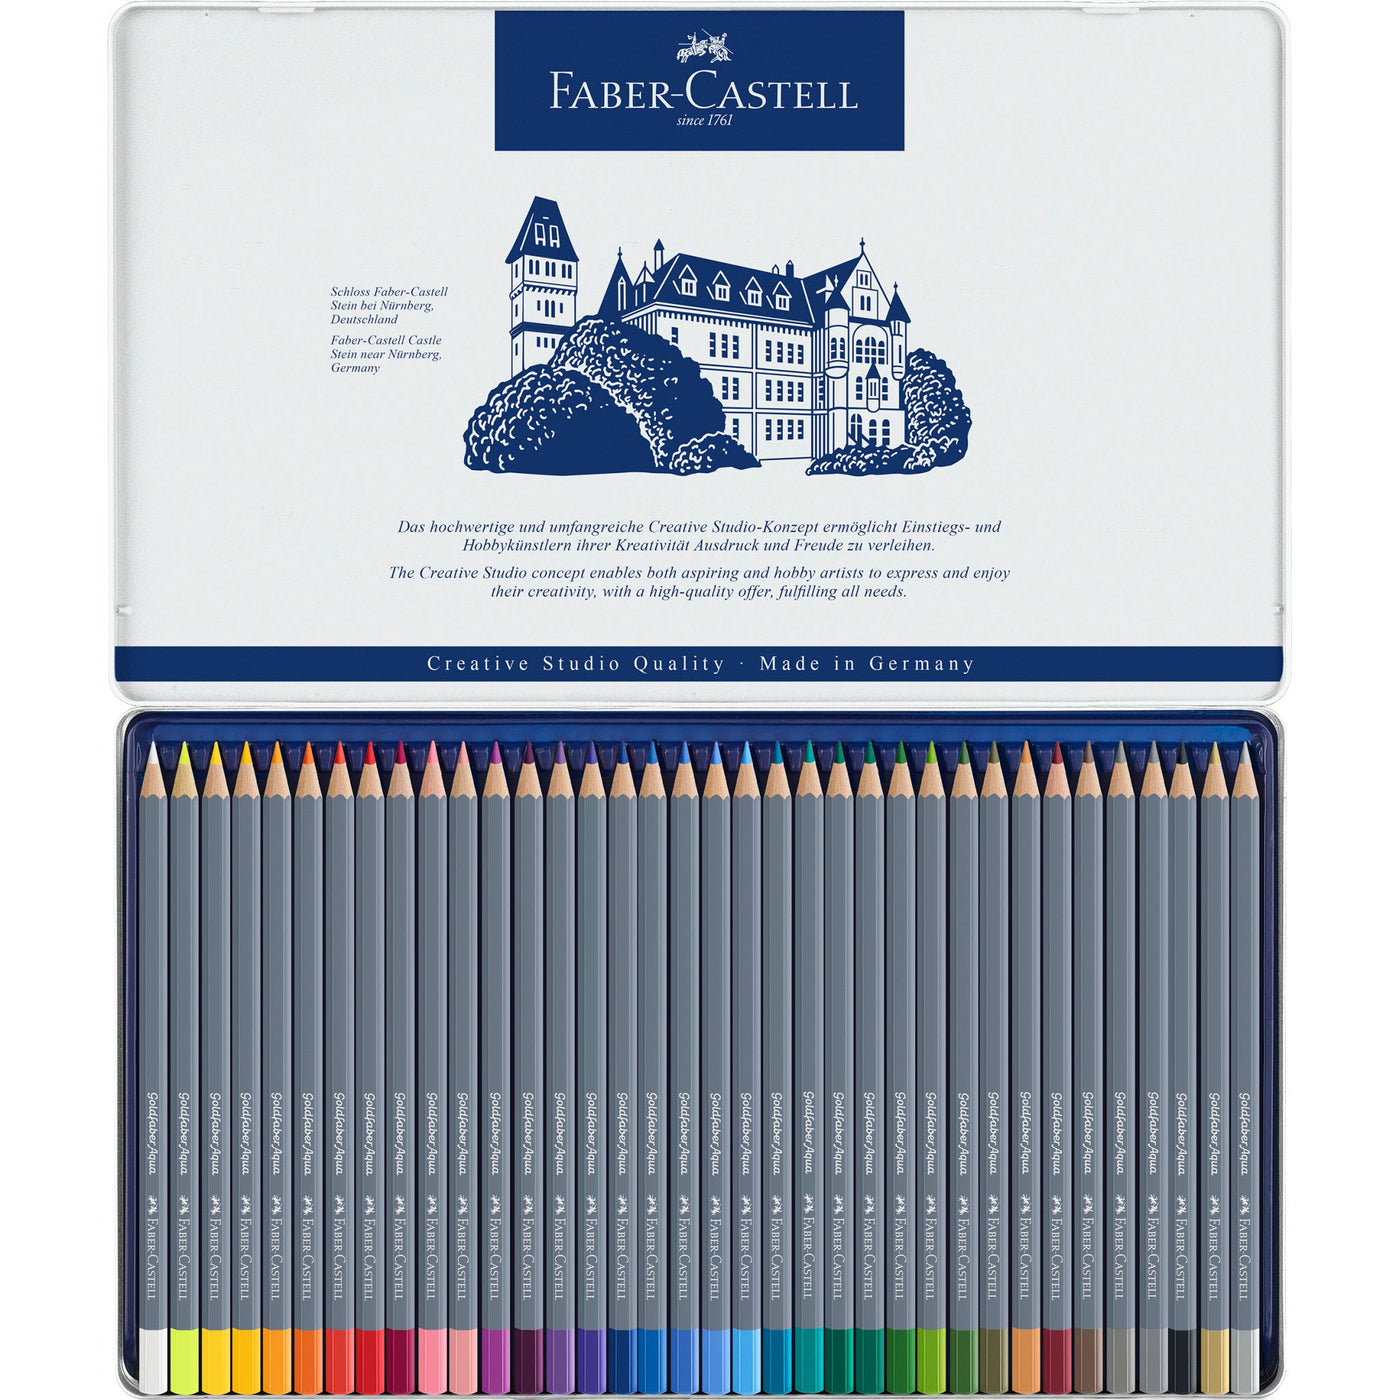 Faber-Castell Goldfaber Aqua Color Pencils - 36 pack | Atlas Stationers.